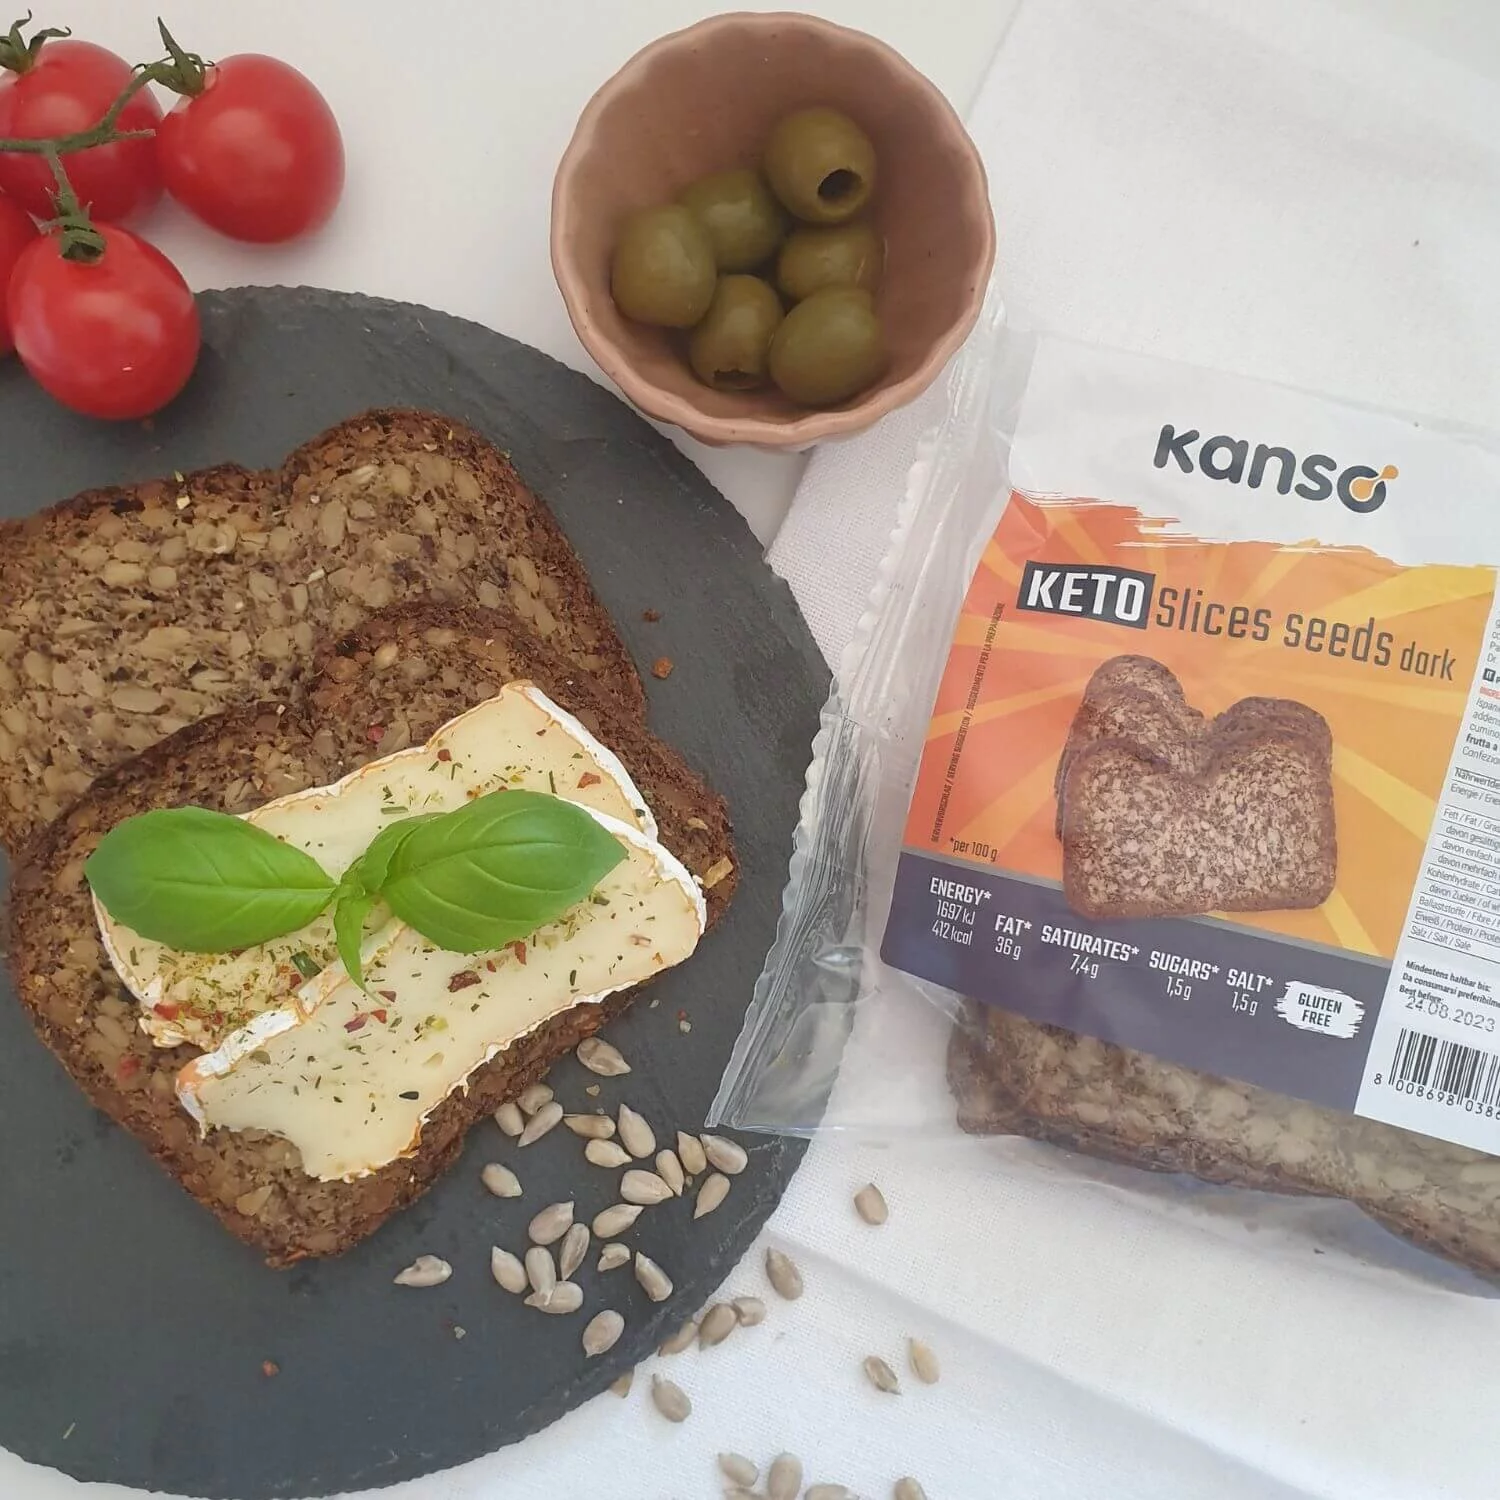 KANSO Brot Ketoslices seeds dark